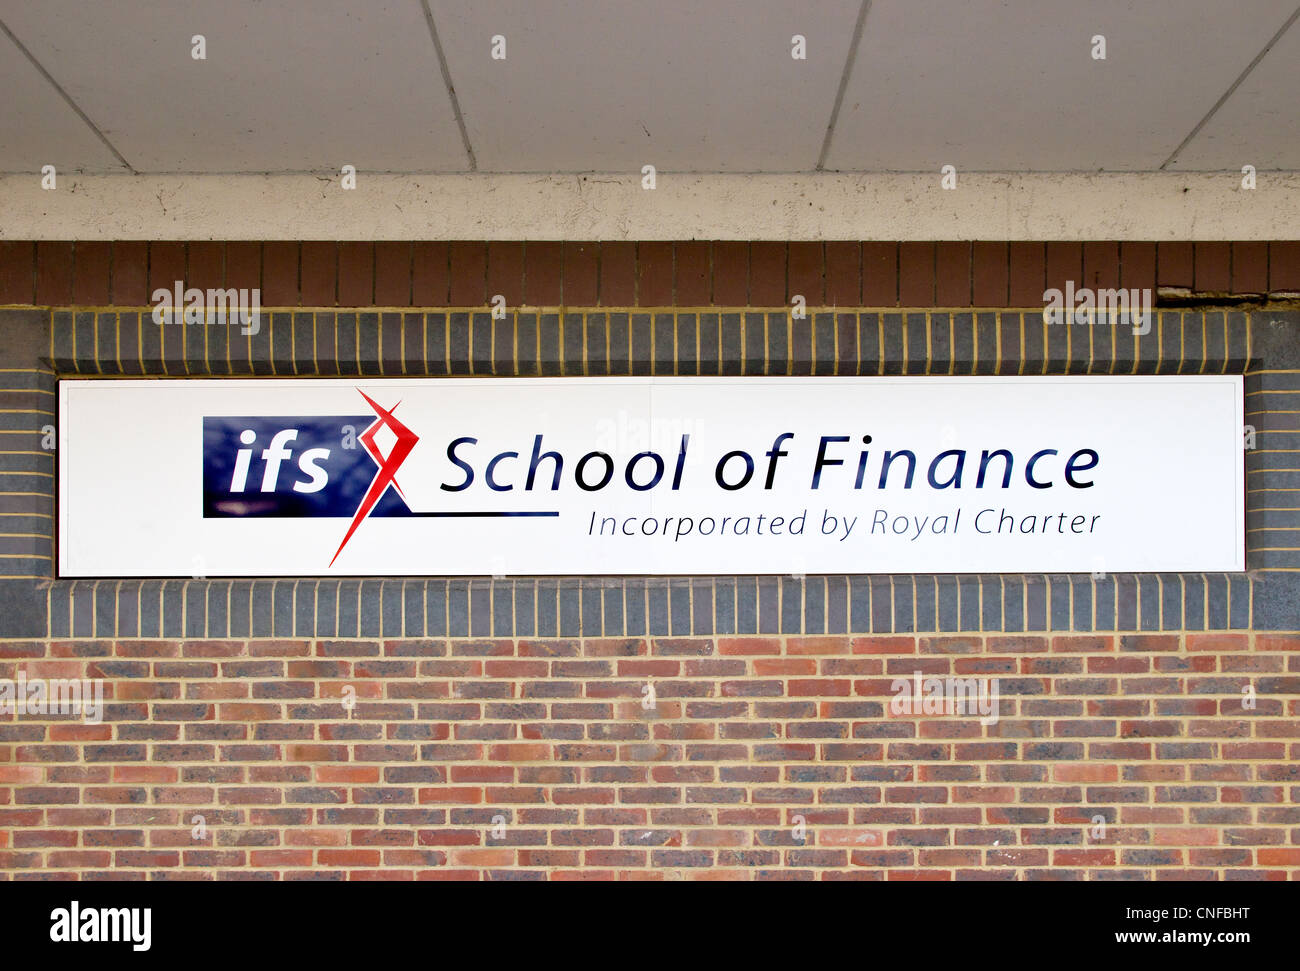 IFS School of Finance, Burgate Lane, Canterbury Kent UK Incorporated by Royal Charter Stock Photo